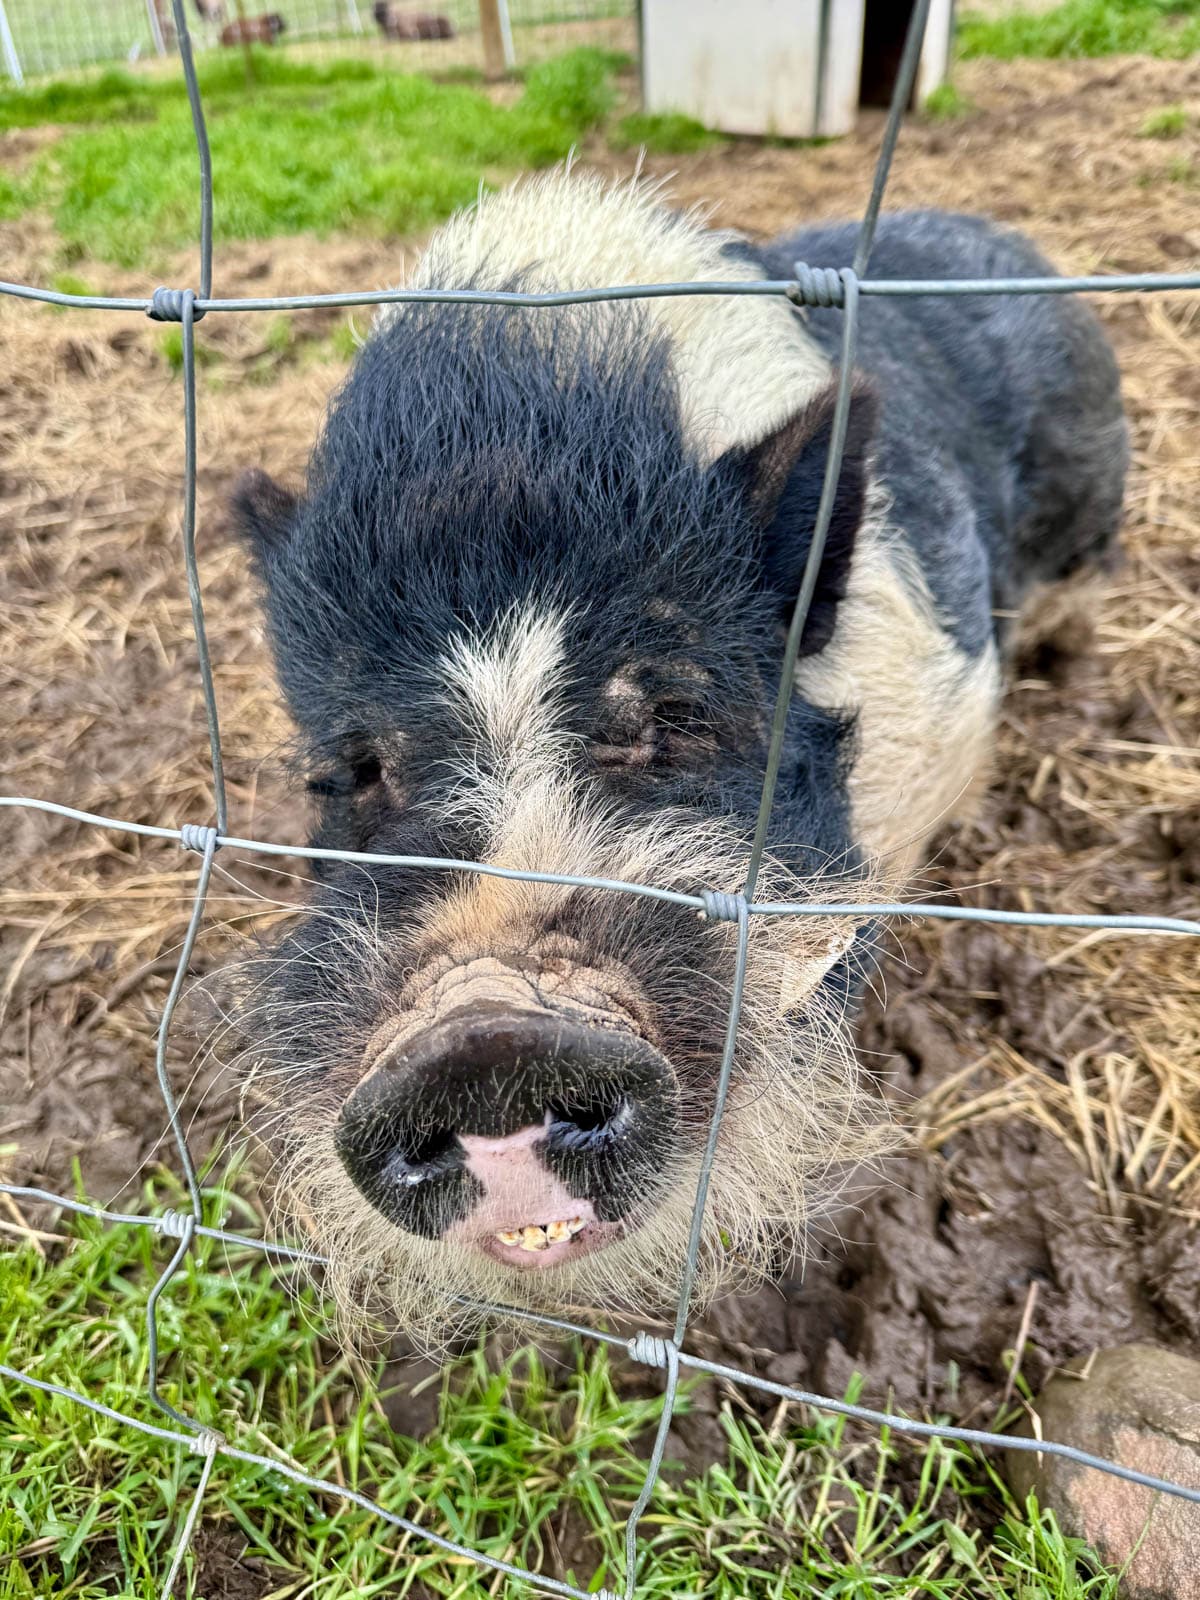 Pig peeking through fence.